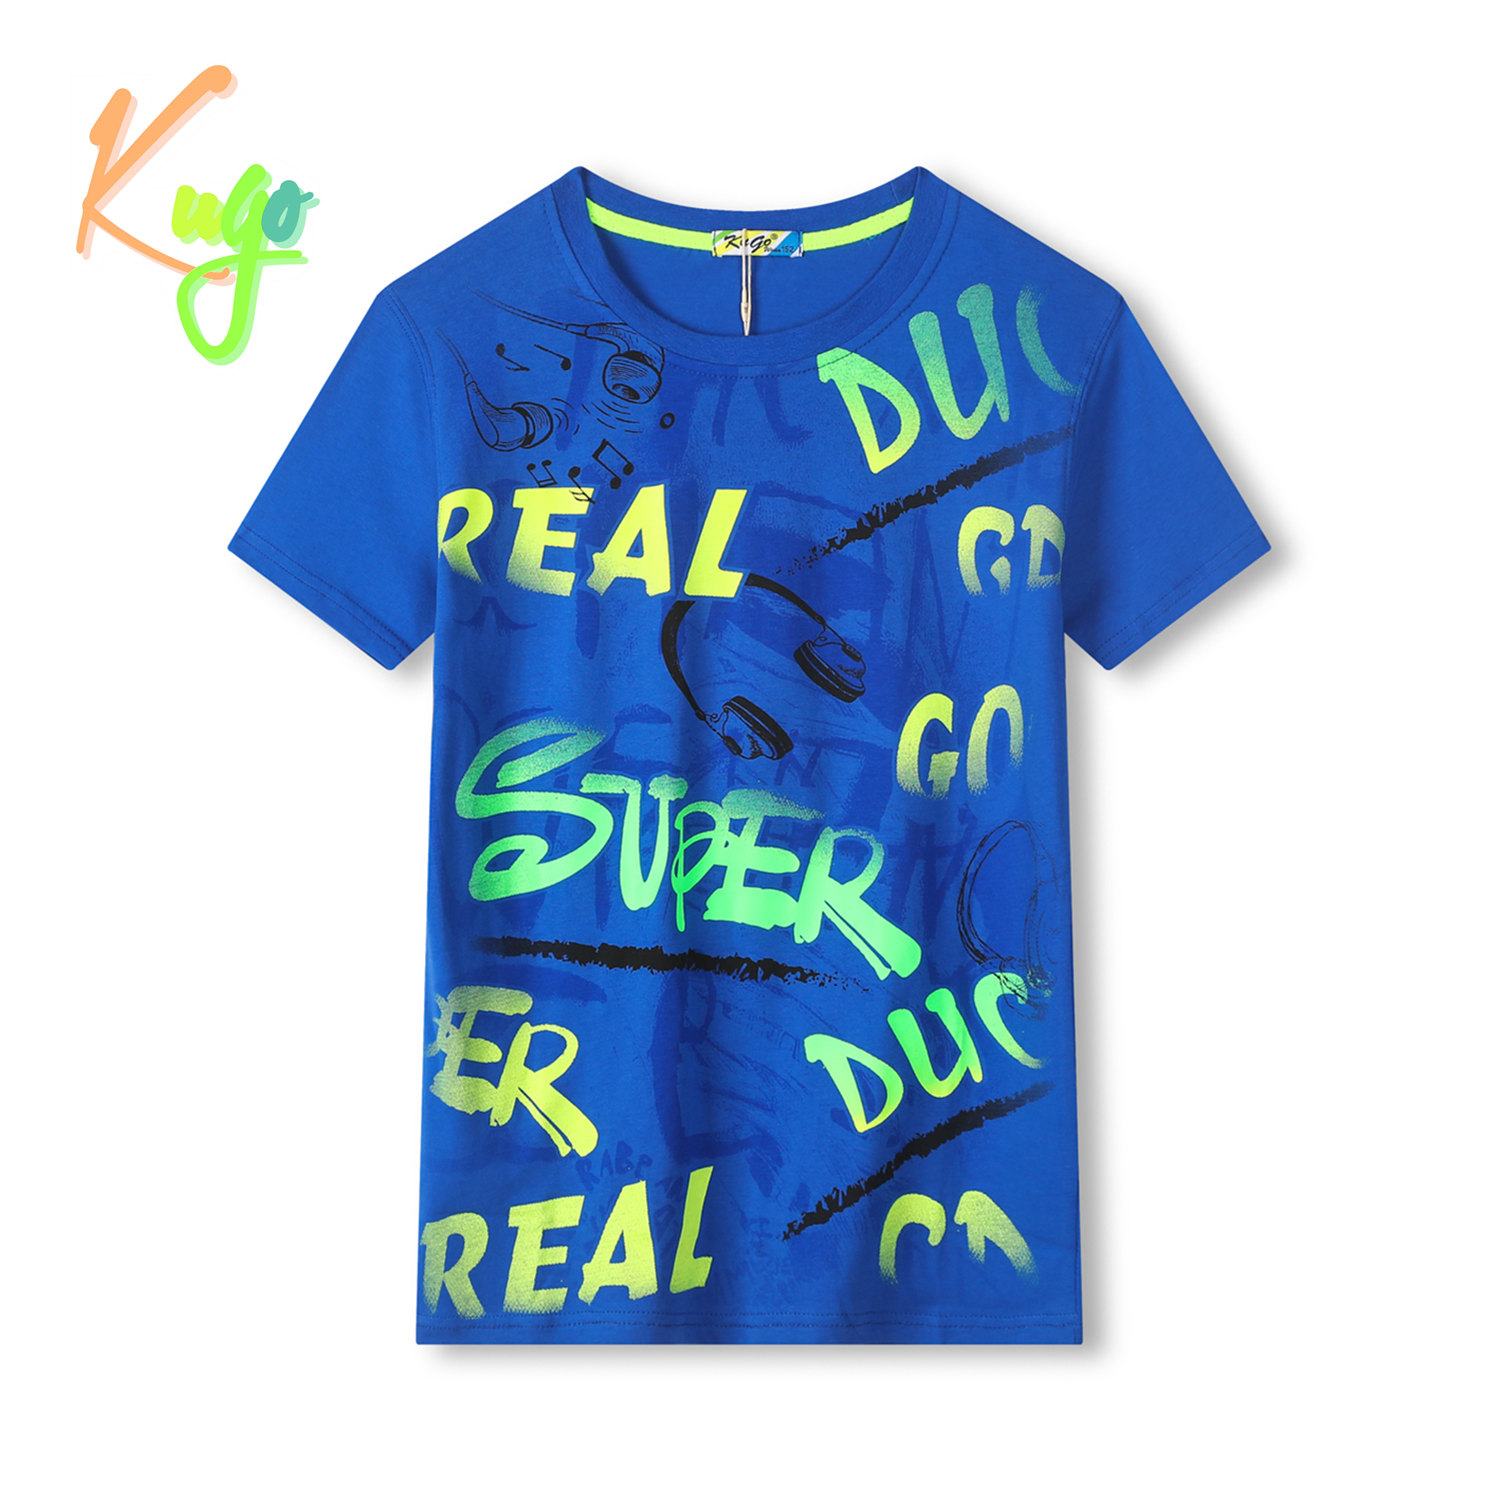 Chlapecké tričko - KUGO TM8576C, modrá Barva: Modrá, Velikost: 146